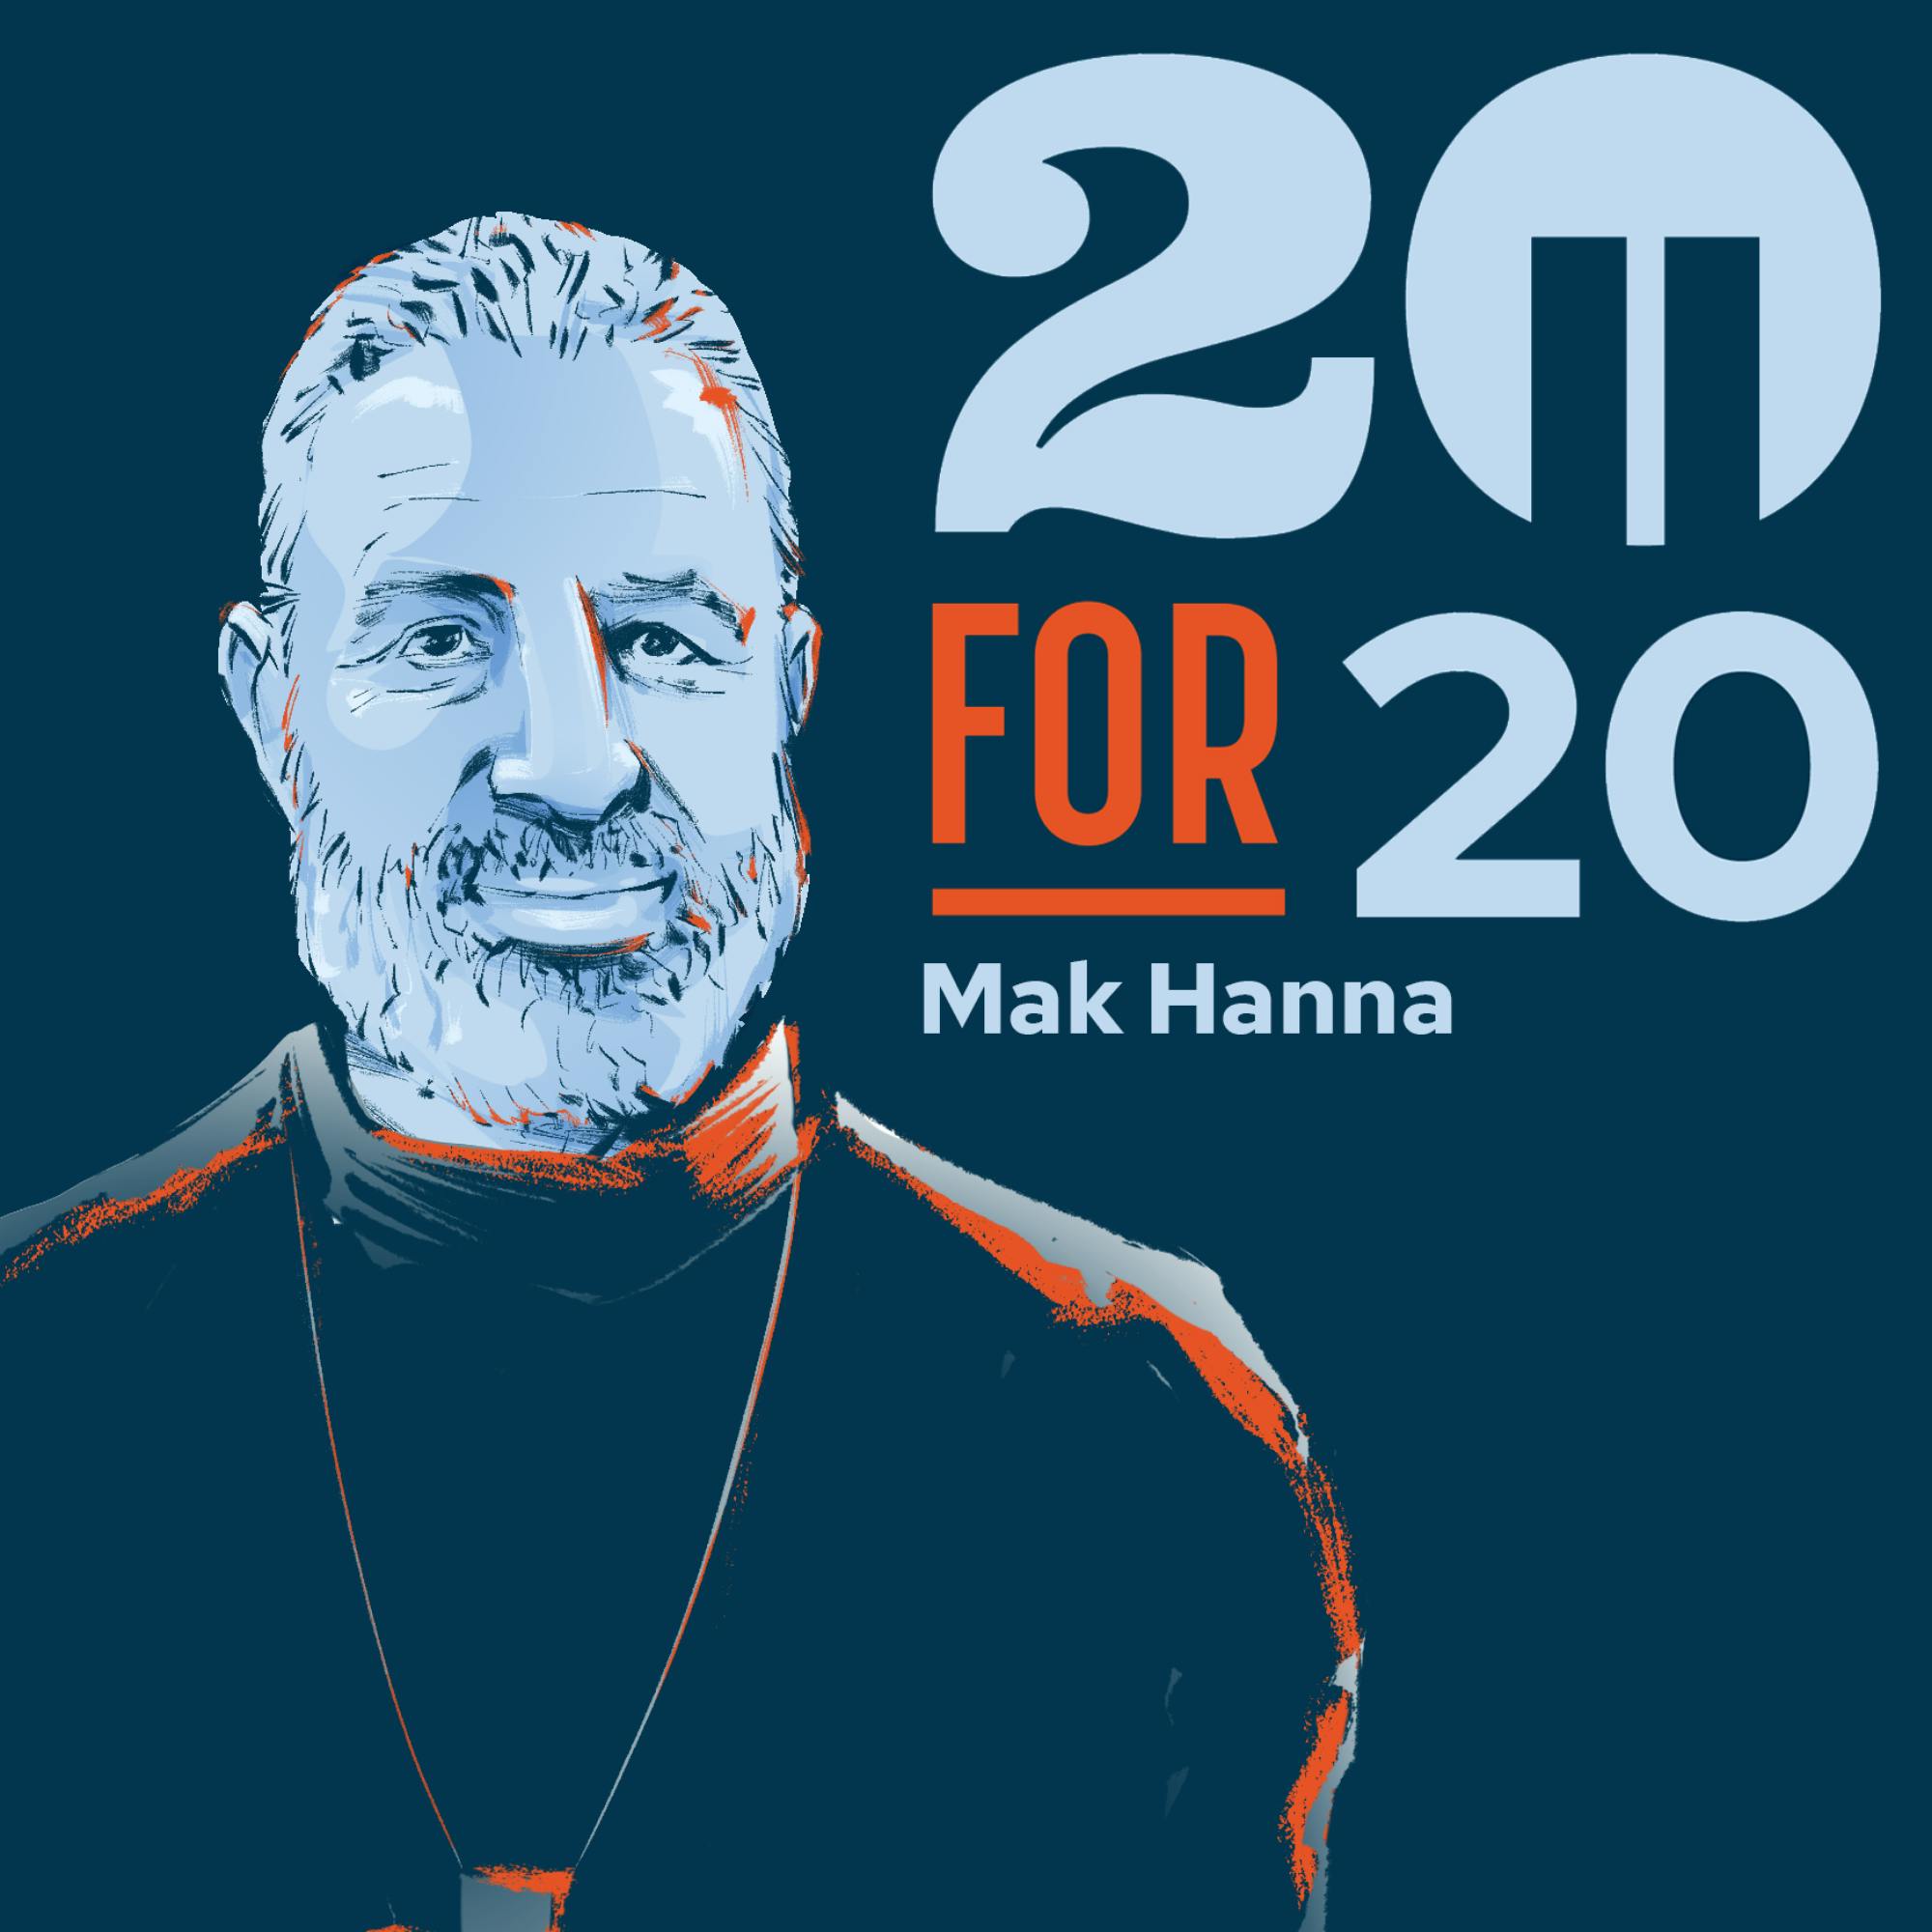 Mak Hanna: Our Team of 5 Civilians Saved Over 50 Lives